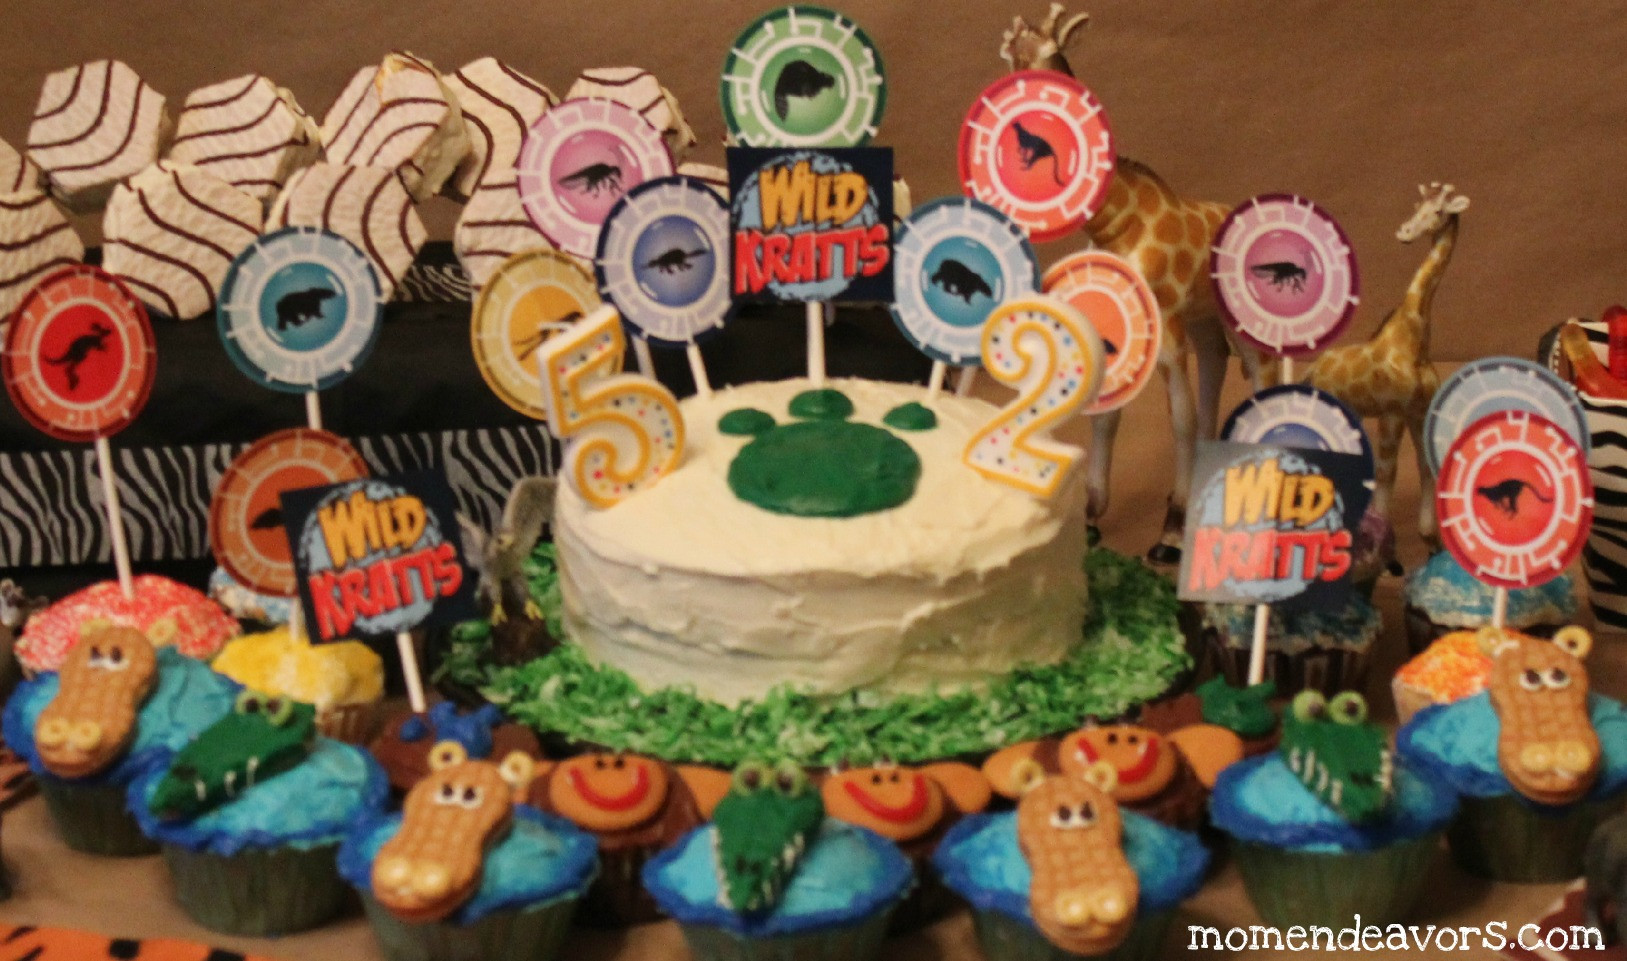 Wild Kratts Birthday Party Ideas
 DIY Wild Kratts Party Decorations & Activities